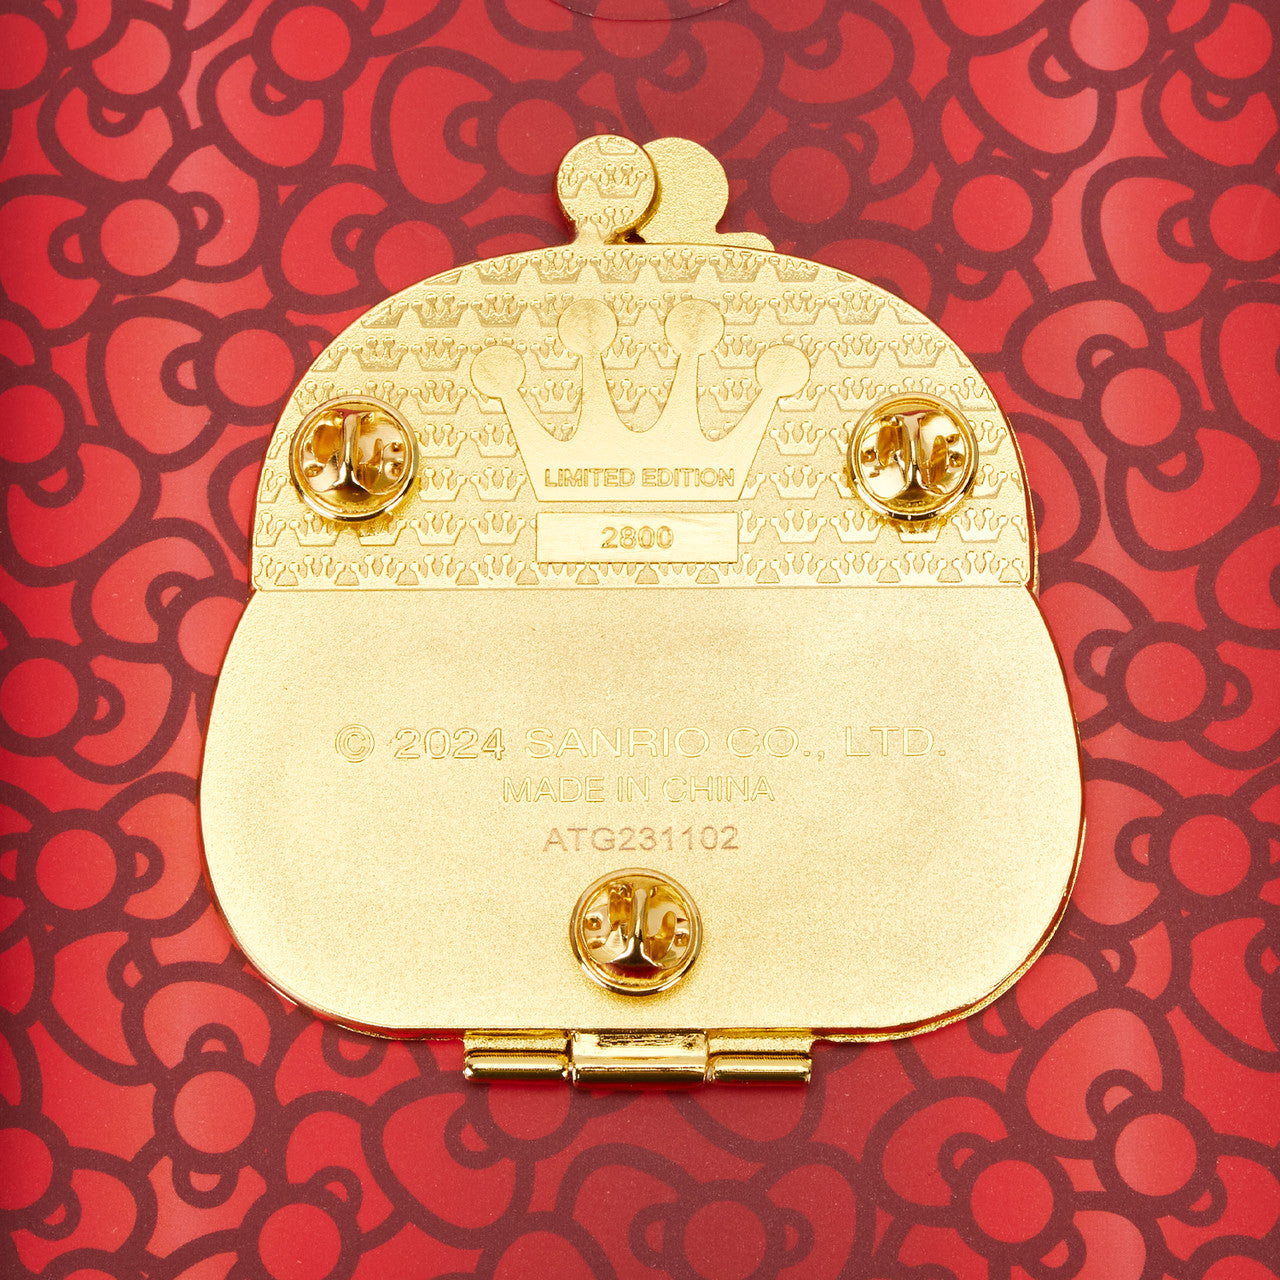 LOUNGEFLY : SANRIO - Hello Kitty 50th Anniversary Coin Bag 3" Pin